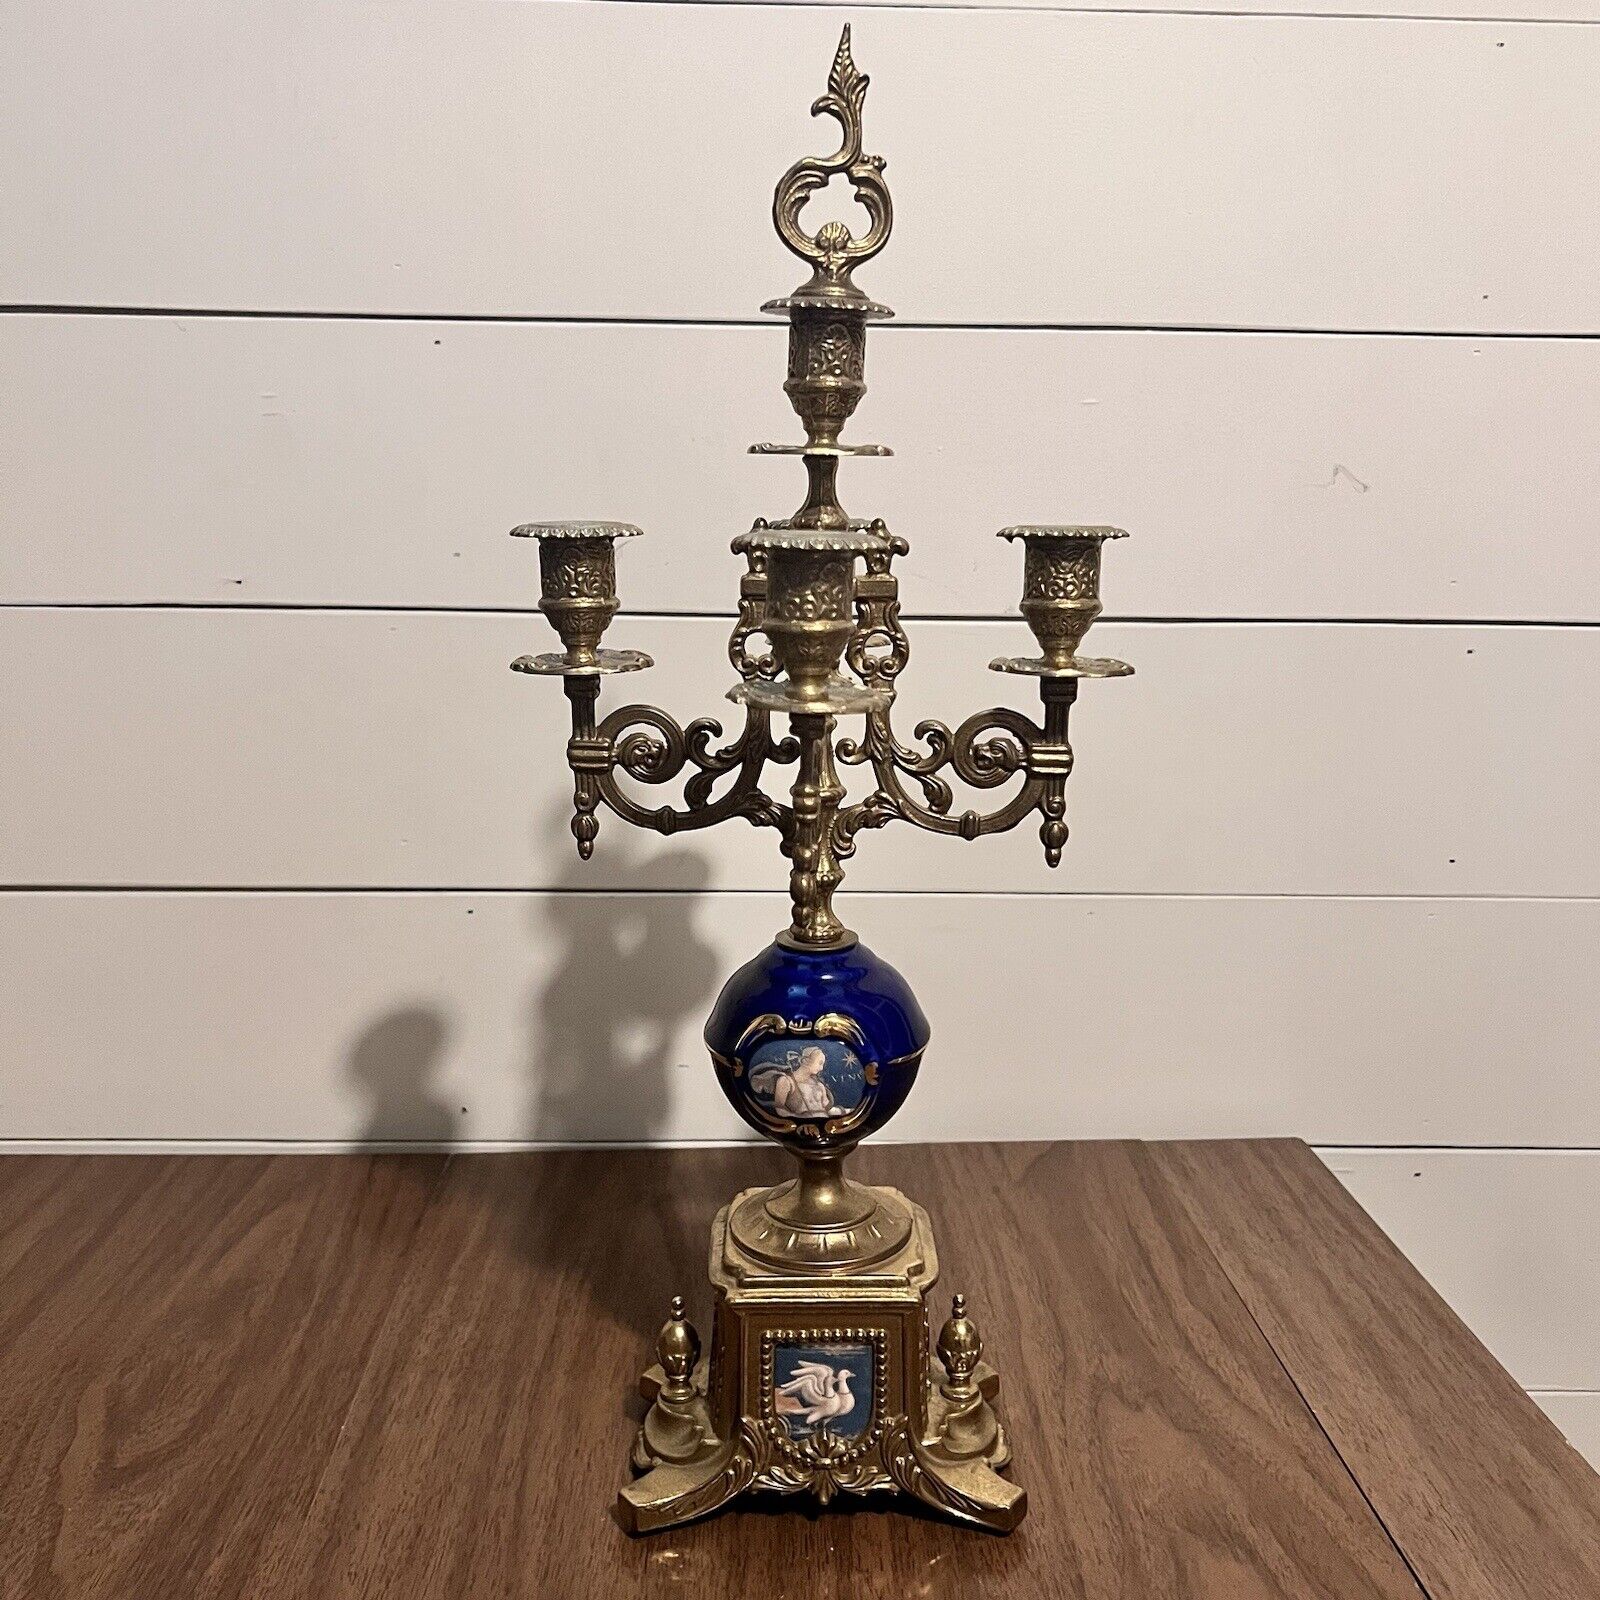 1920s Candelabra Ornate Imperial Italian Brass Cobalt Blue Candle Stick Holder